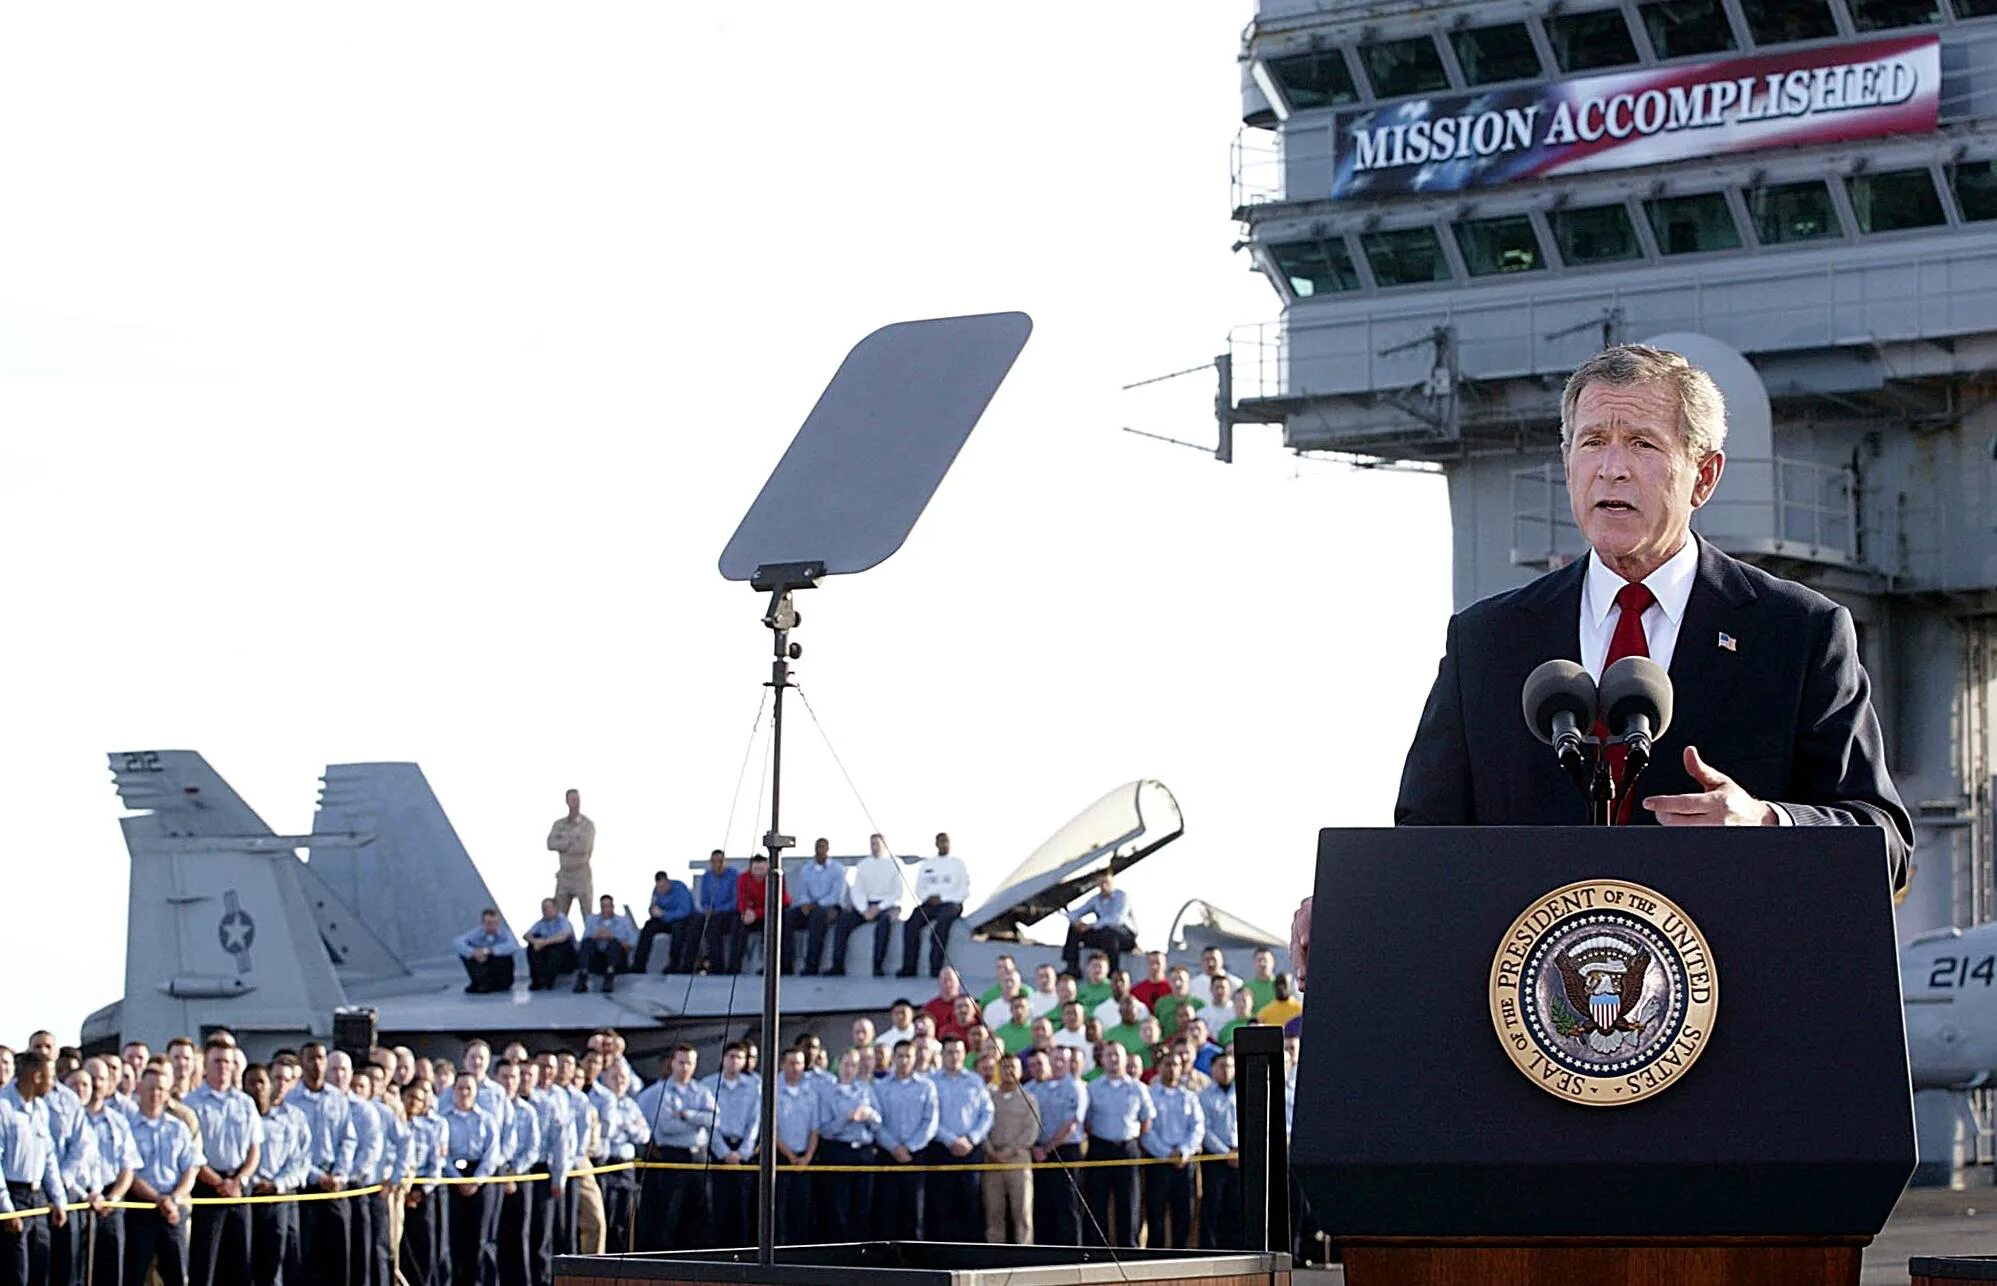 Джордж Буш Mission accomplished. Авианосец Джордж Буш. Джордж Буш младший на авианосце. Джордж Буш Ирак 2003. 1 мая 2003